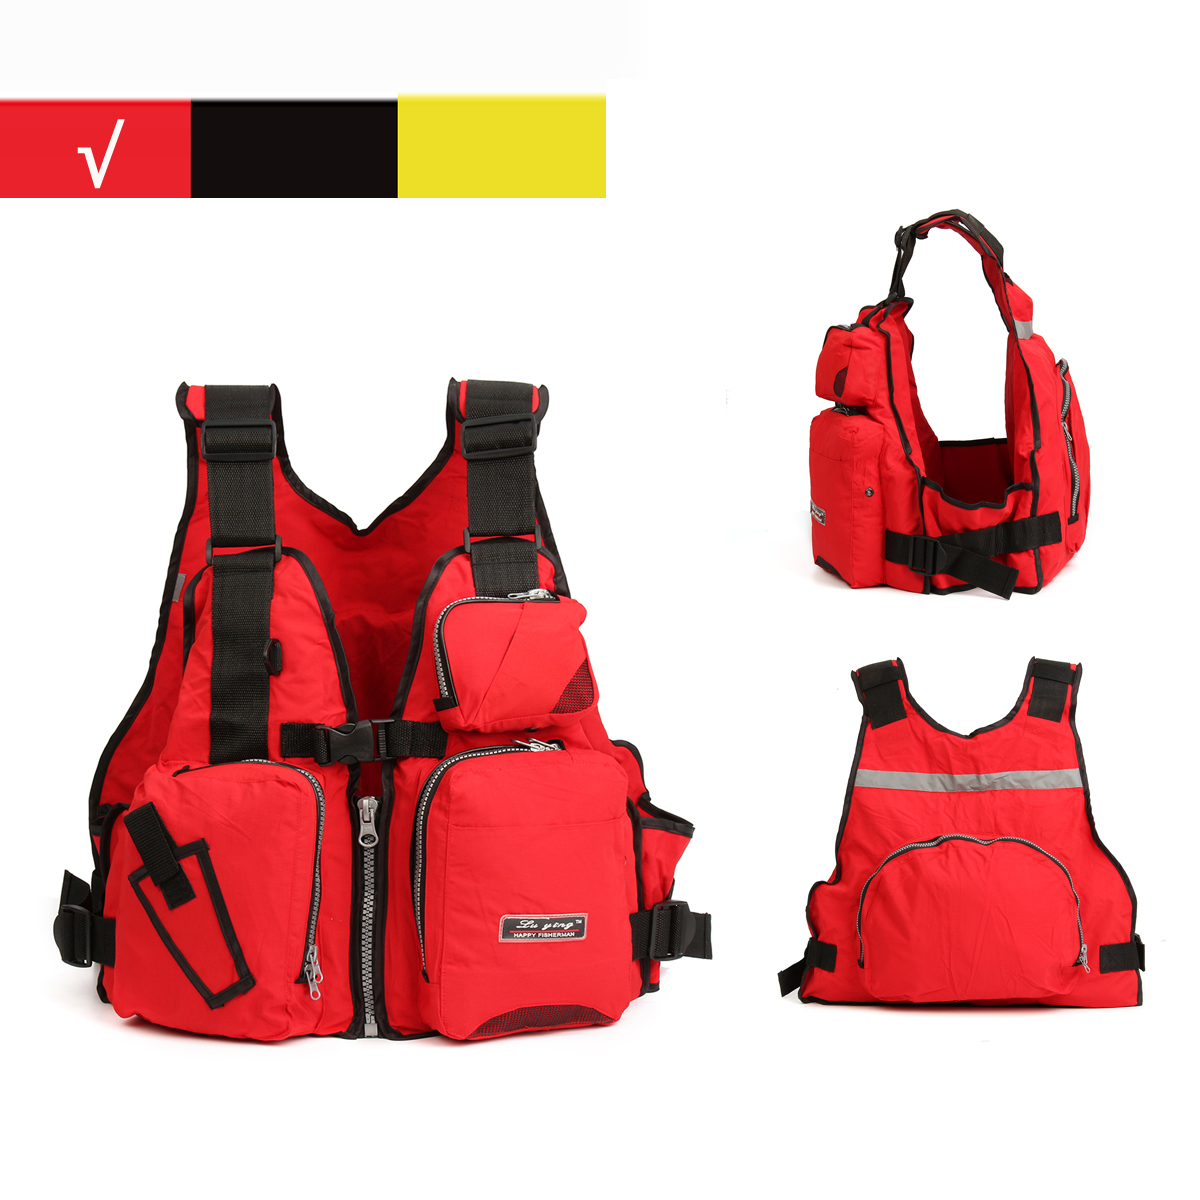 Outdoor Life Jackets for Adult kayaking, Multi-Pockets & Reflective Belt, Adjustable Life Vests for Adults, Safe Aid Jacket, Buoyancy Waistcoat, Swim Vest for Canoe Dinghy, Sailing - image 3 of 8